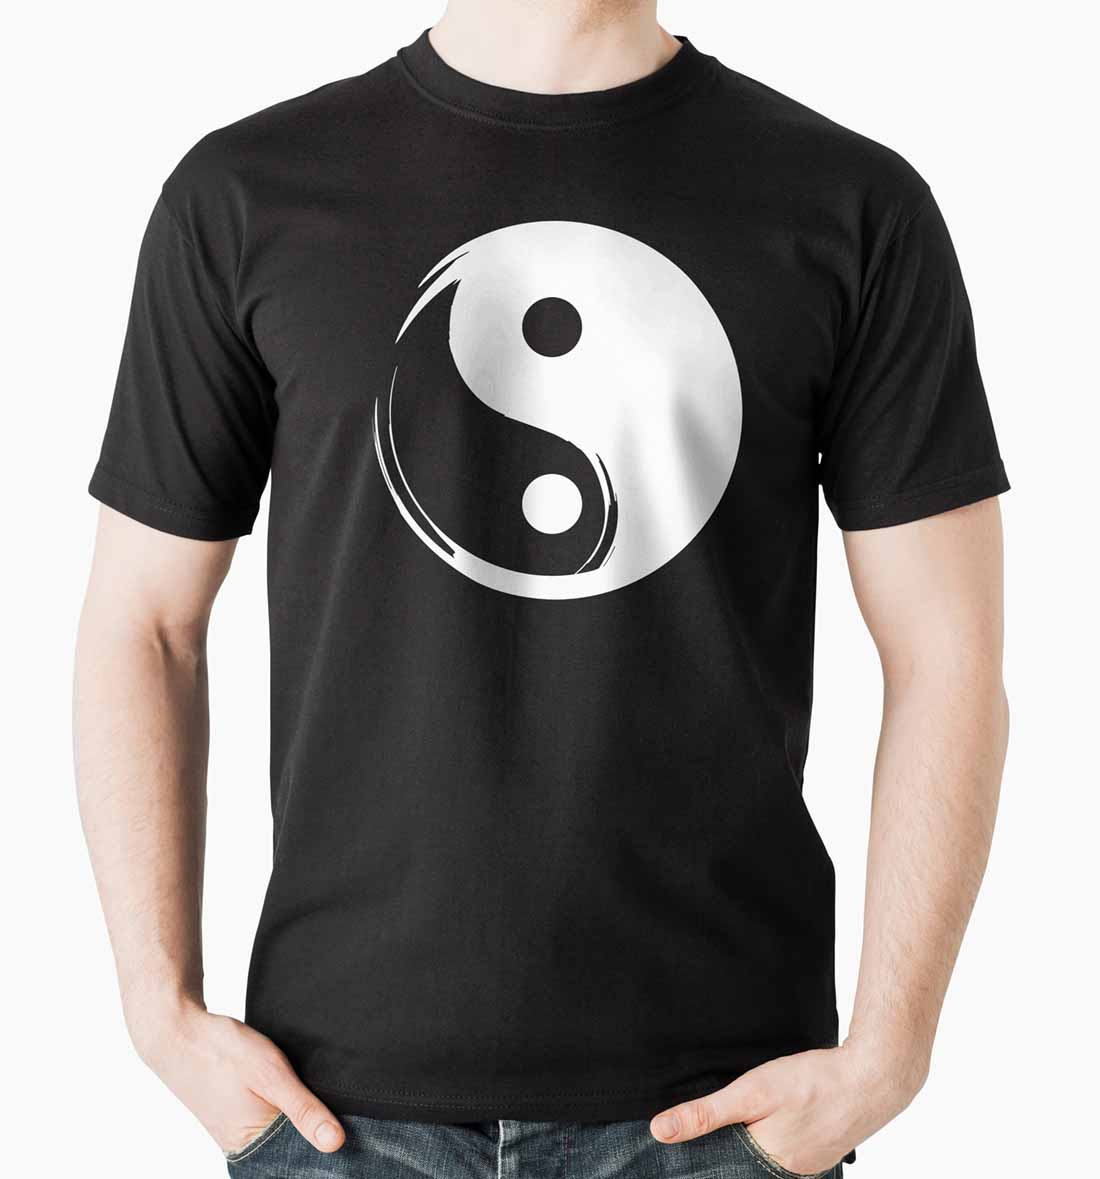 Yin and yang tshirt art T-shirt